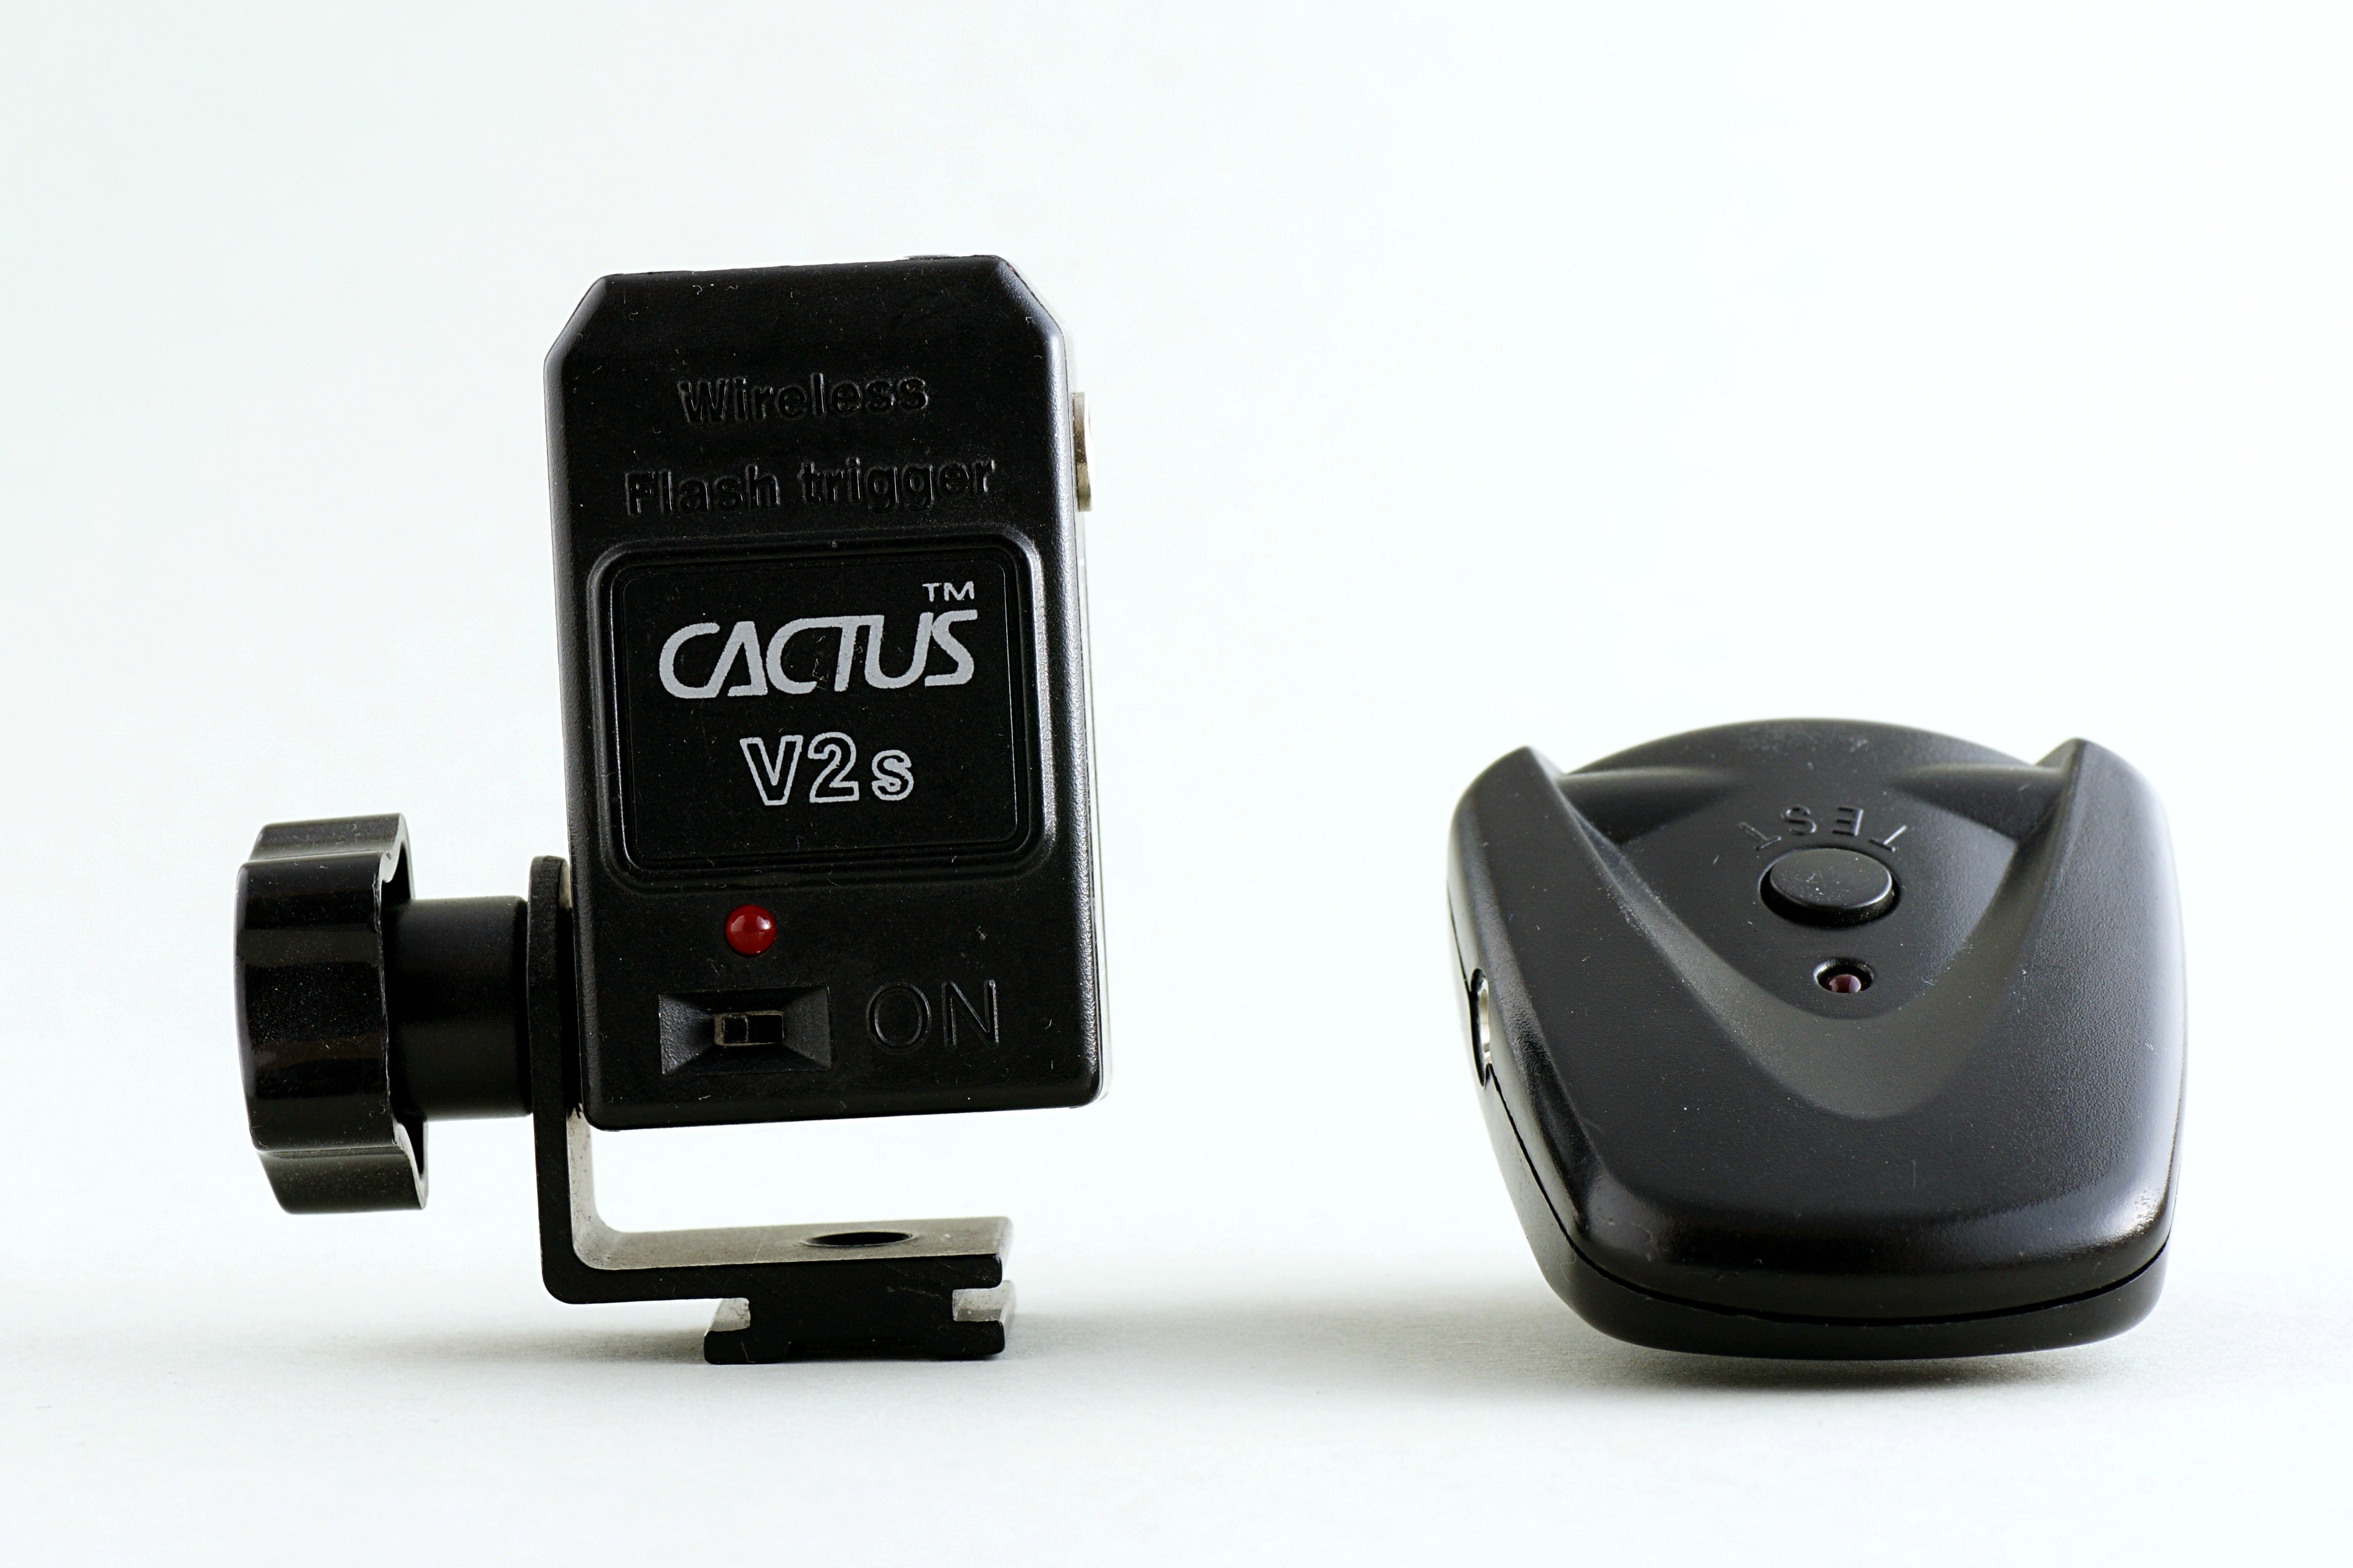 File:Cactus V2s Wireless Flash Trigger.jpg - Wikimedia Commons.